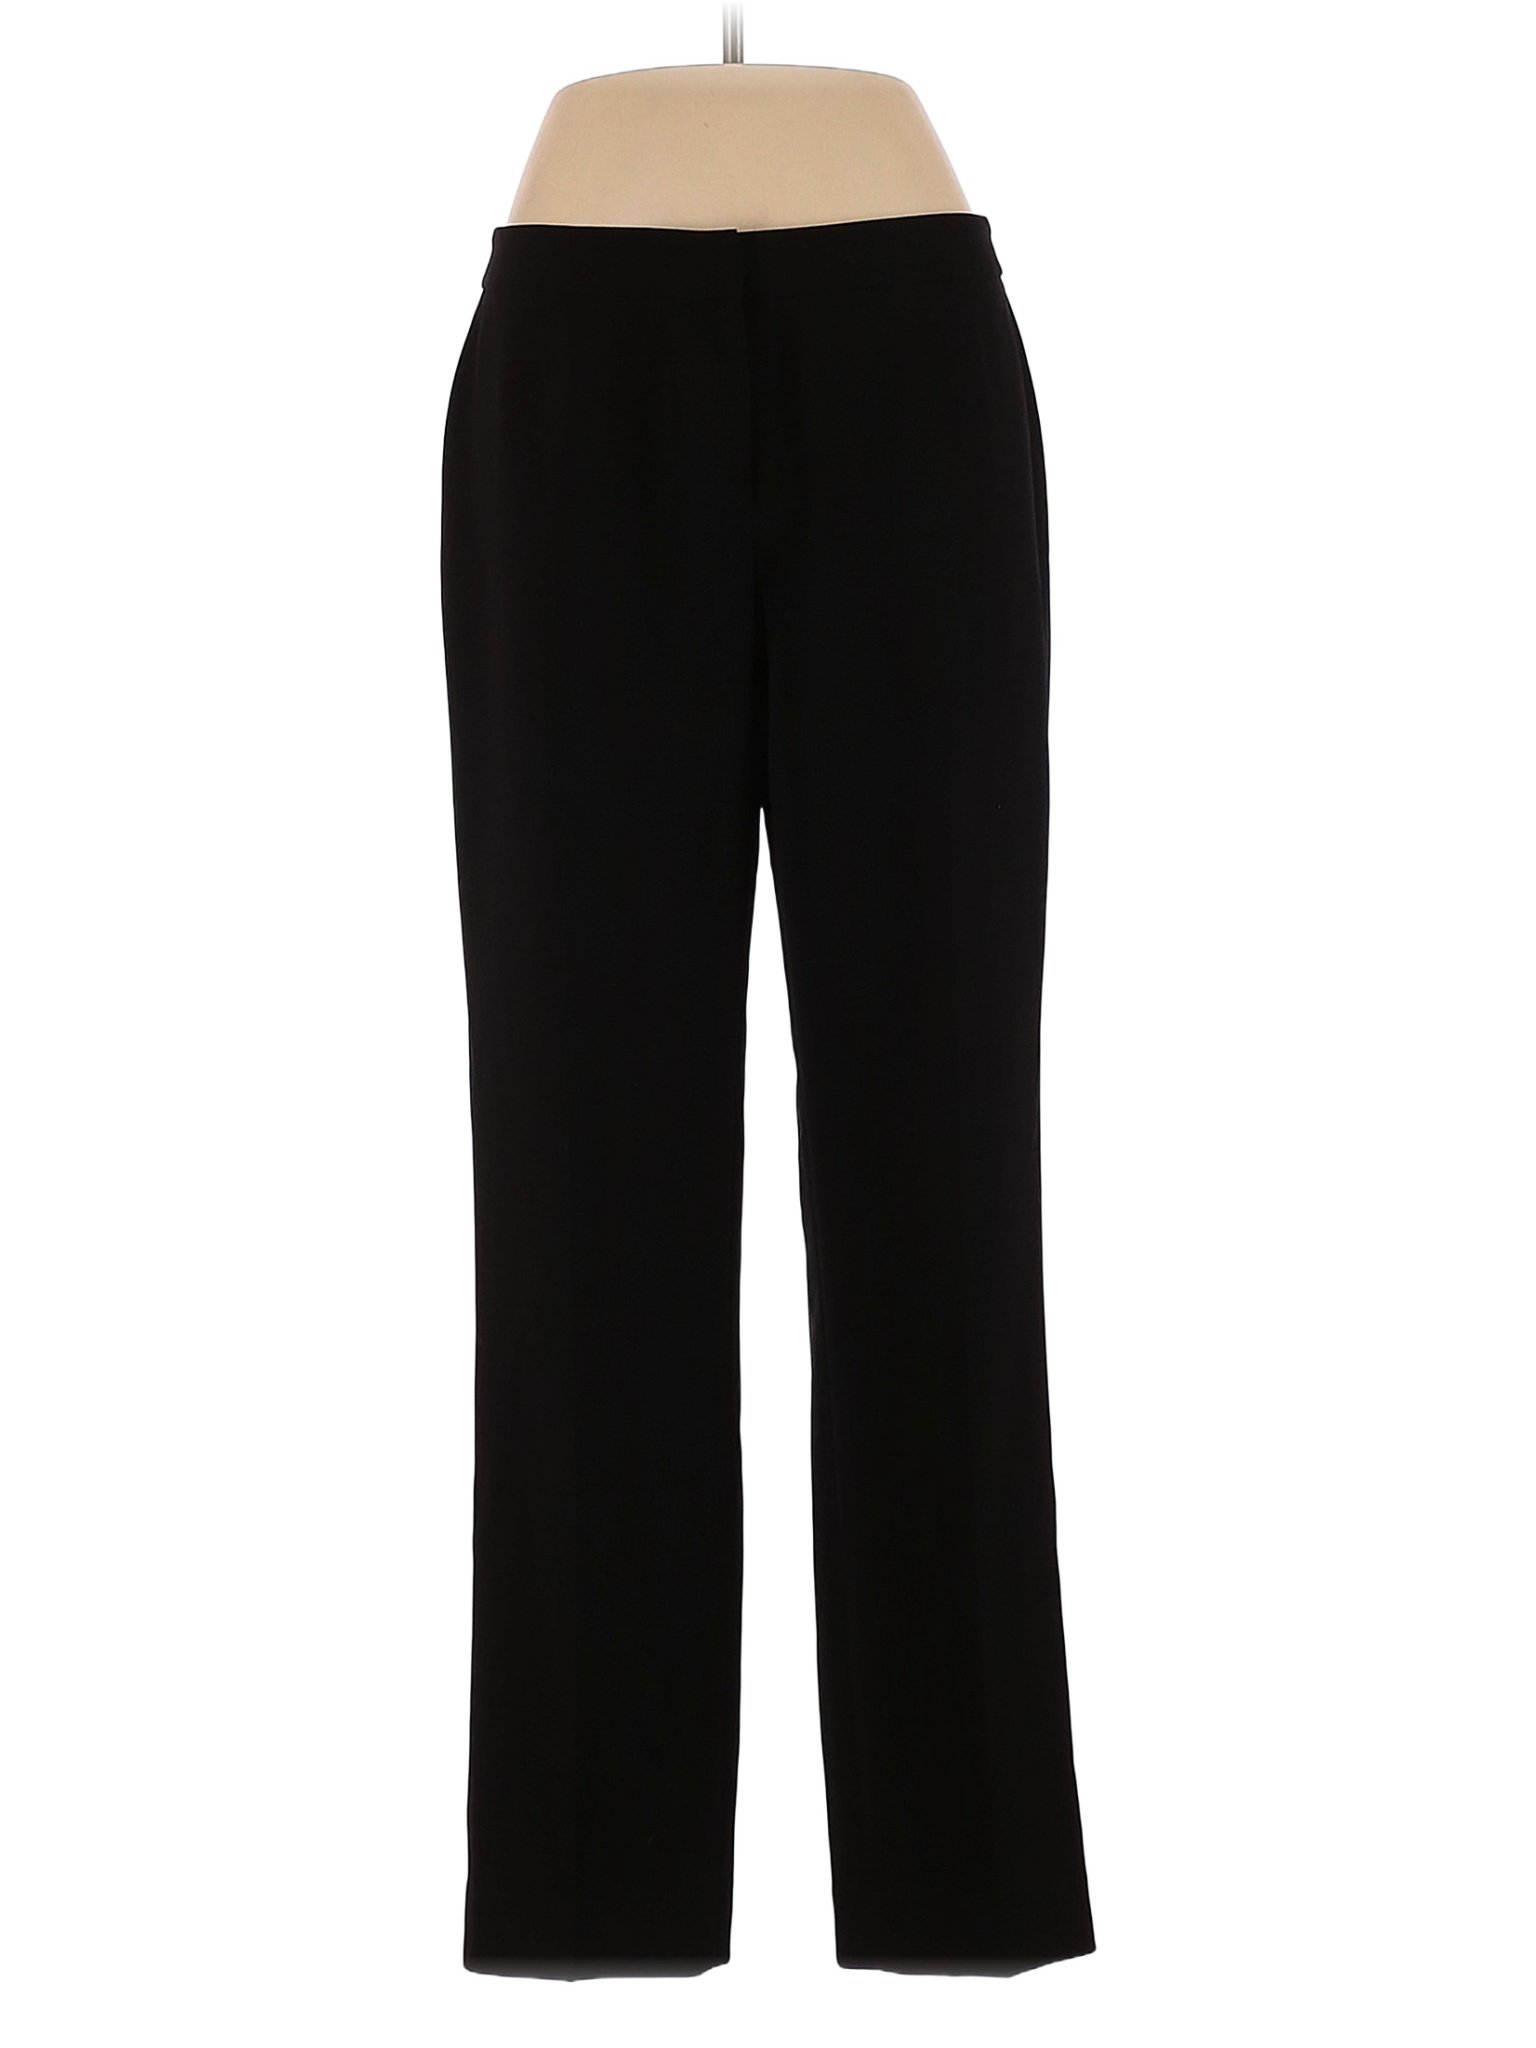 Lafayette 148 New York Solid Black Dress Pants Size 6 - 94% off | thredUP